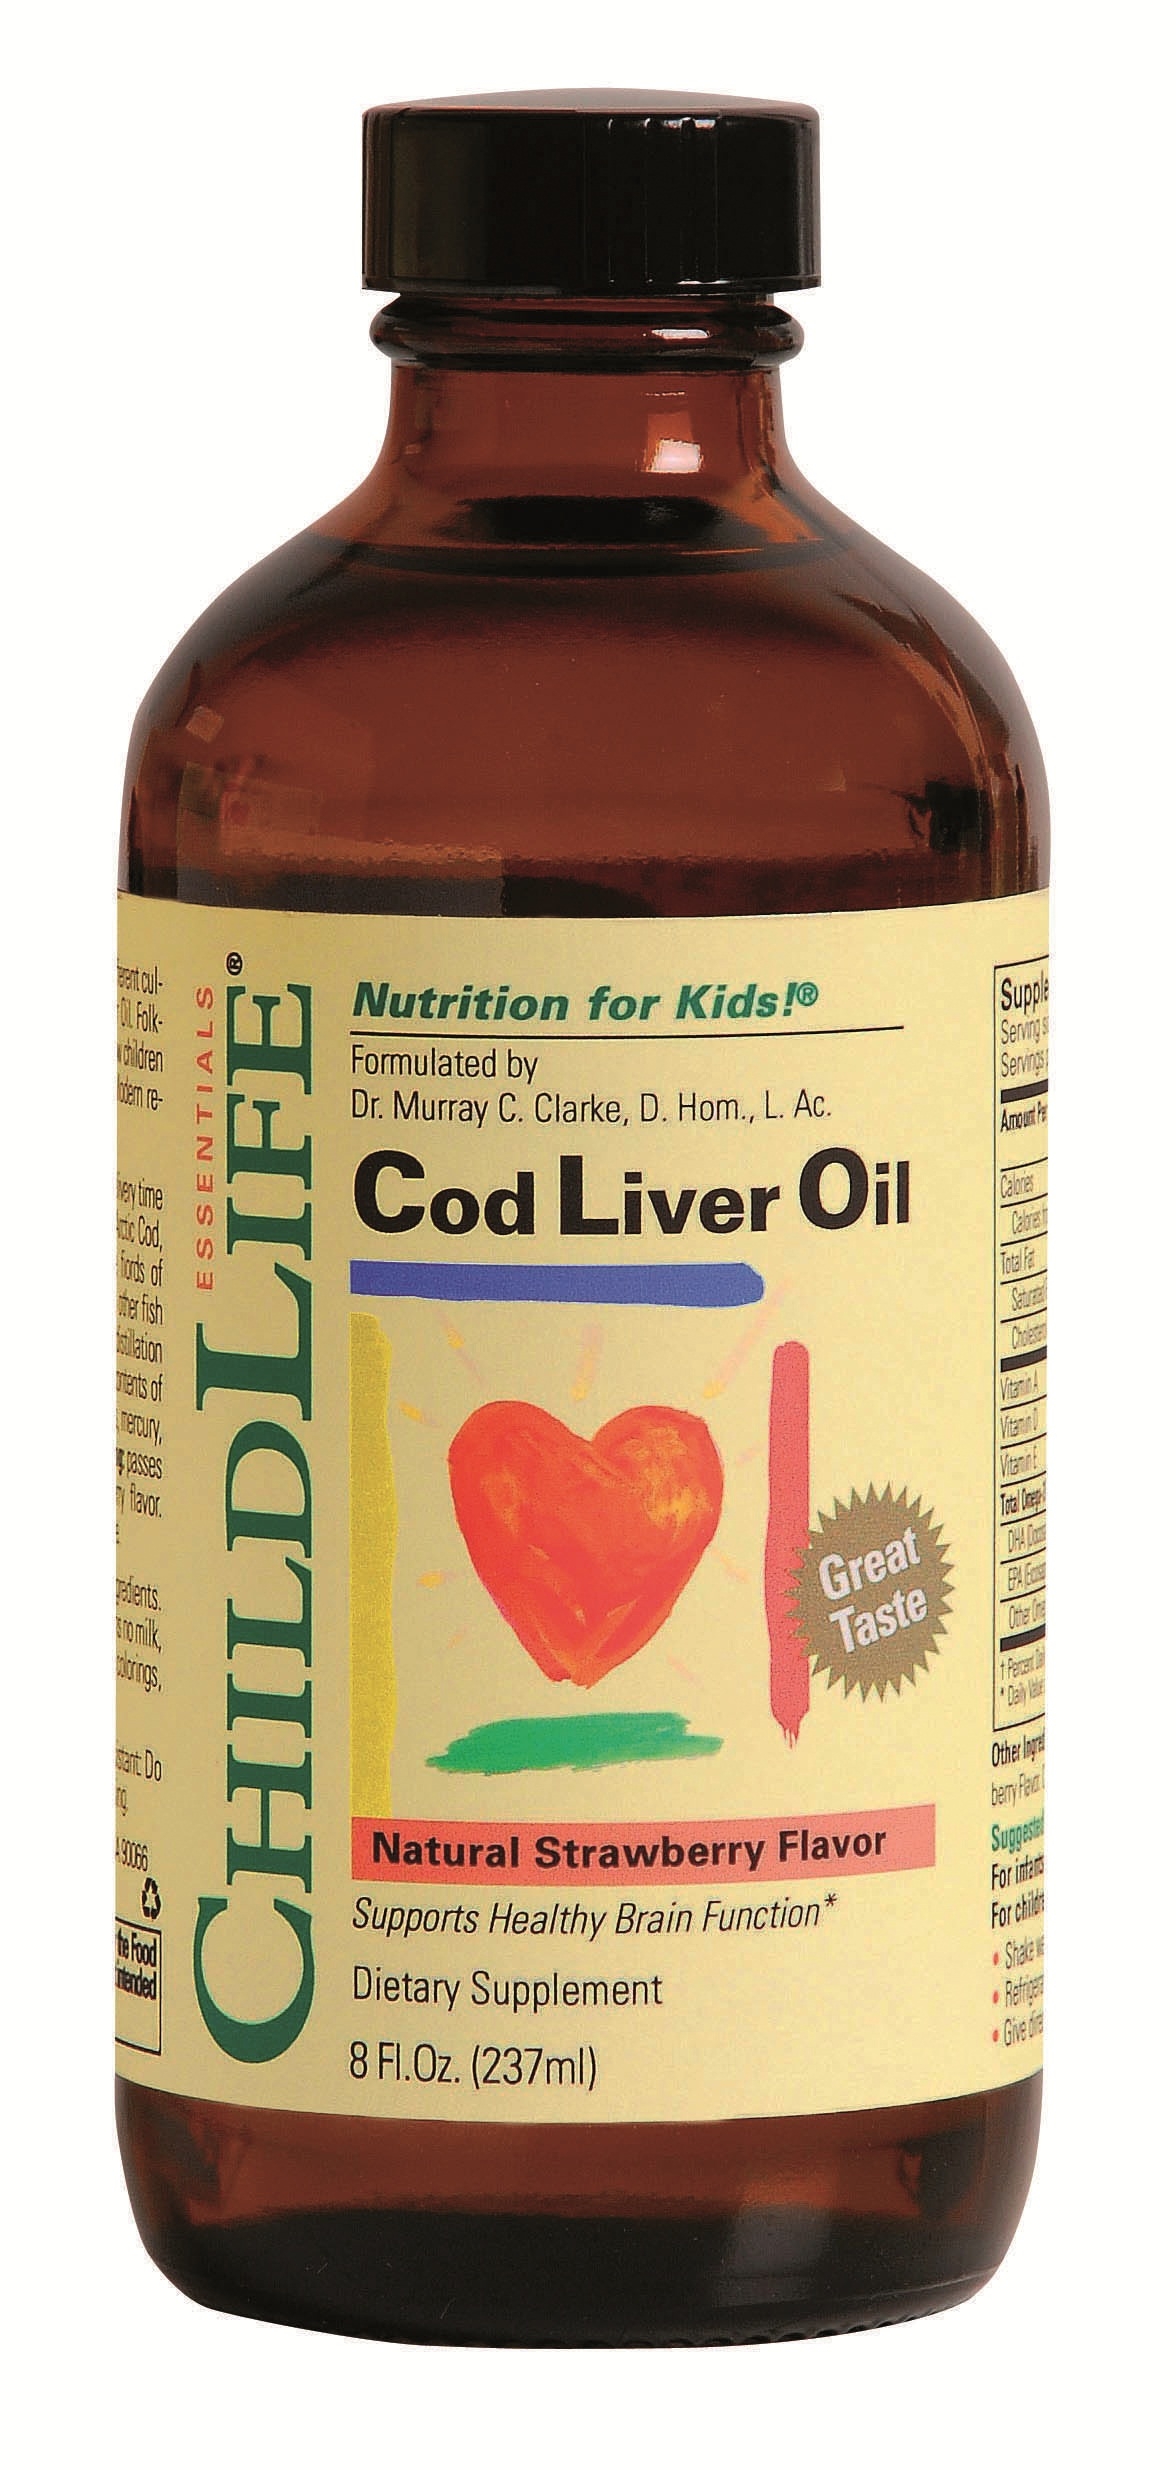 sfatulparintilor.ro – cod liver oil – secom